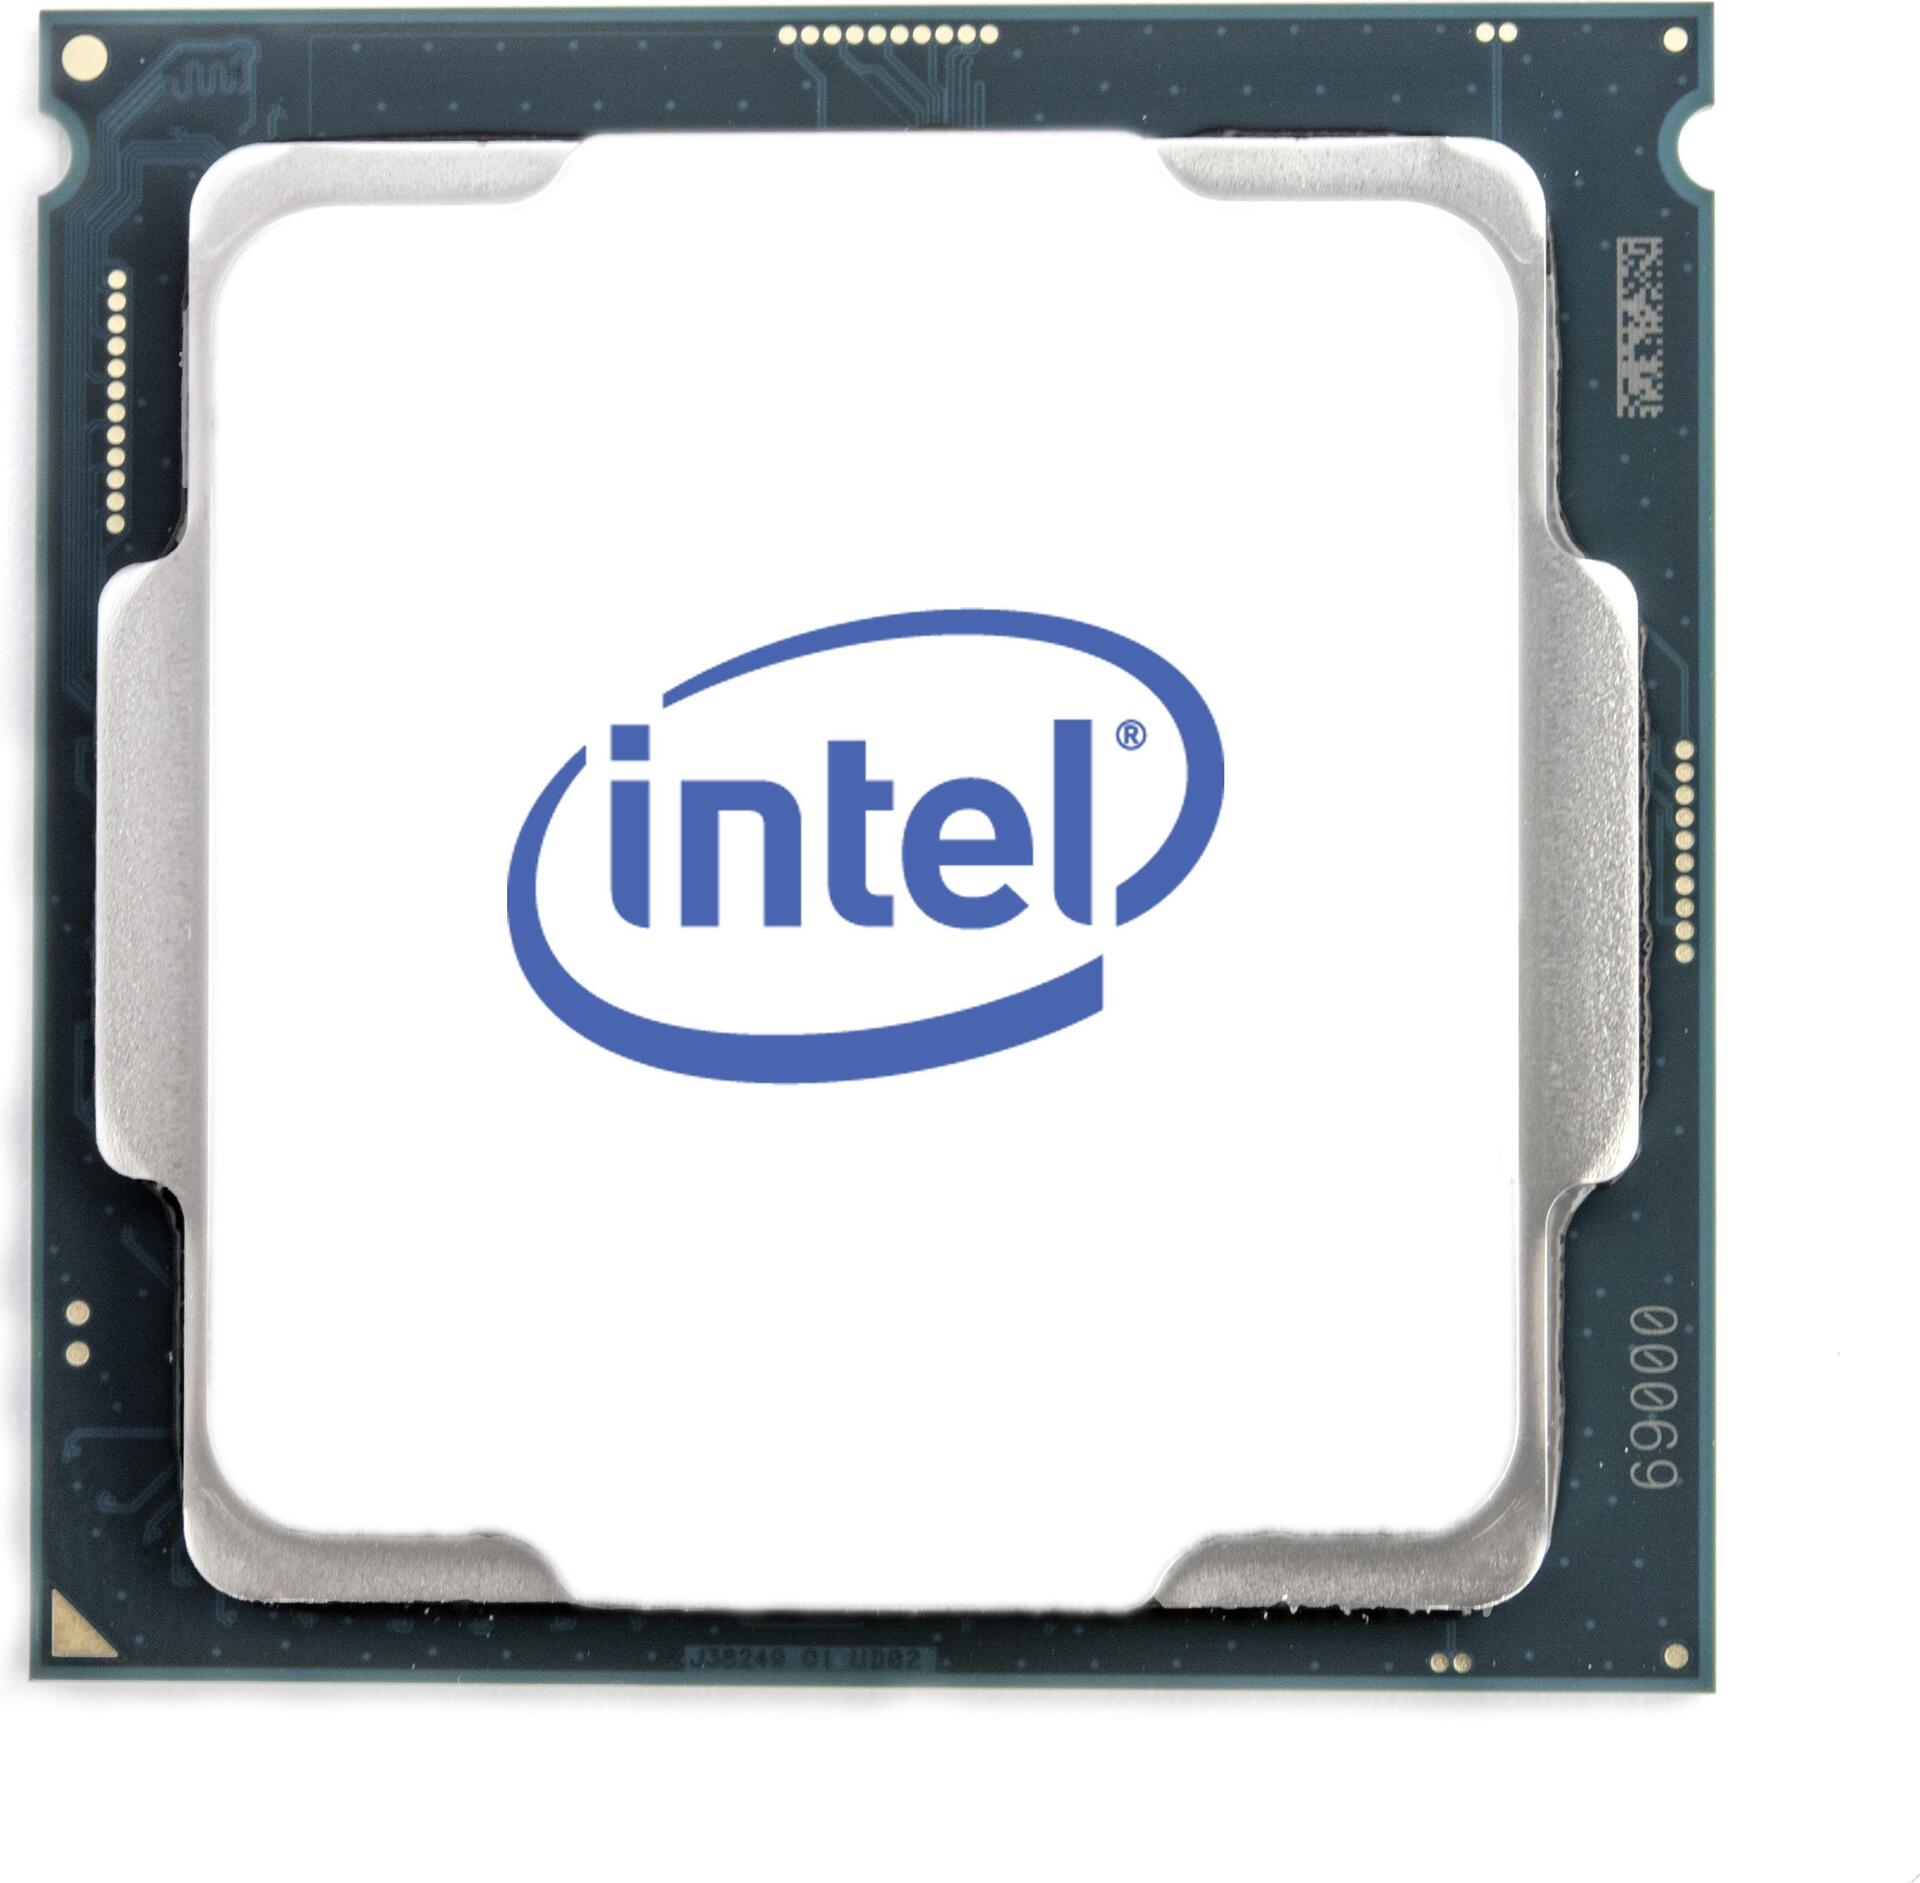 Intel Xeon Gold 5320 (BX806895320)